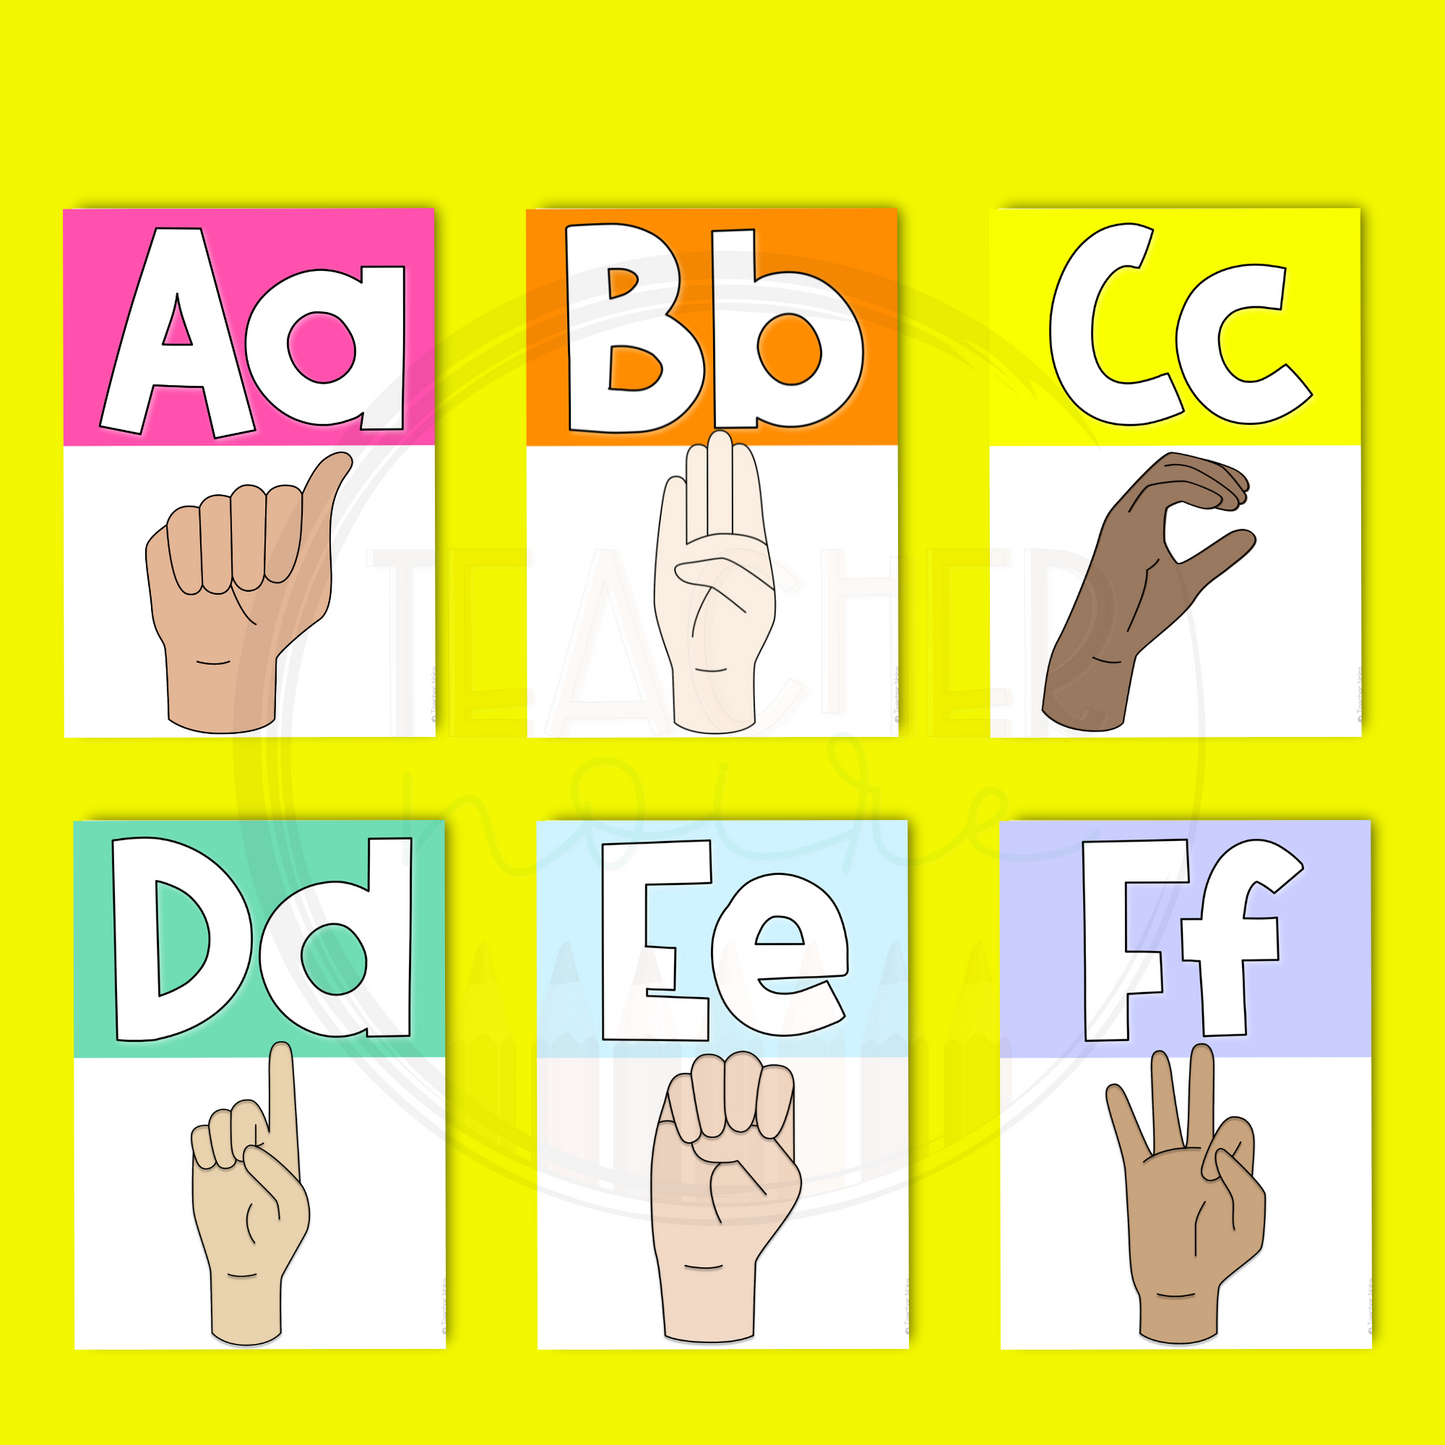 American Sign Language Alphabet